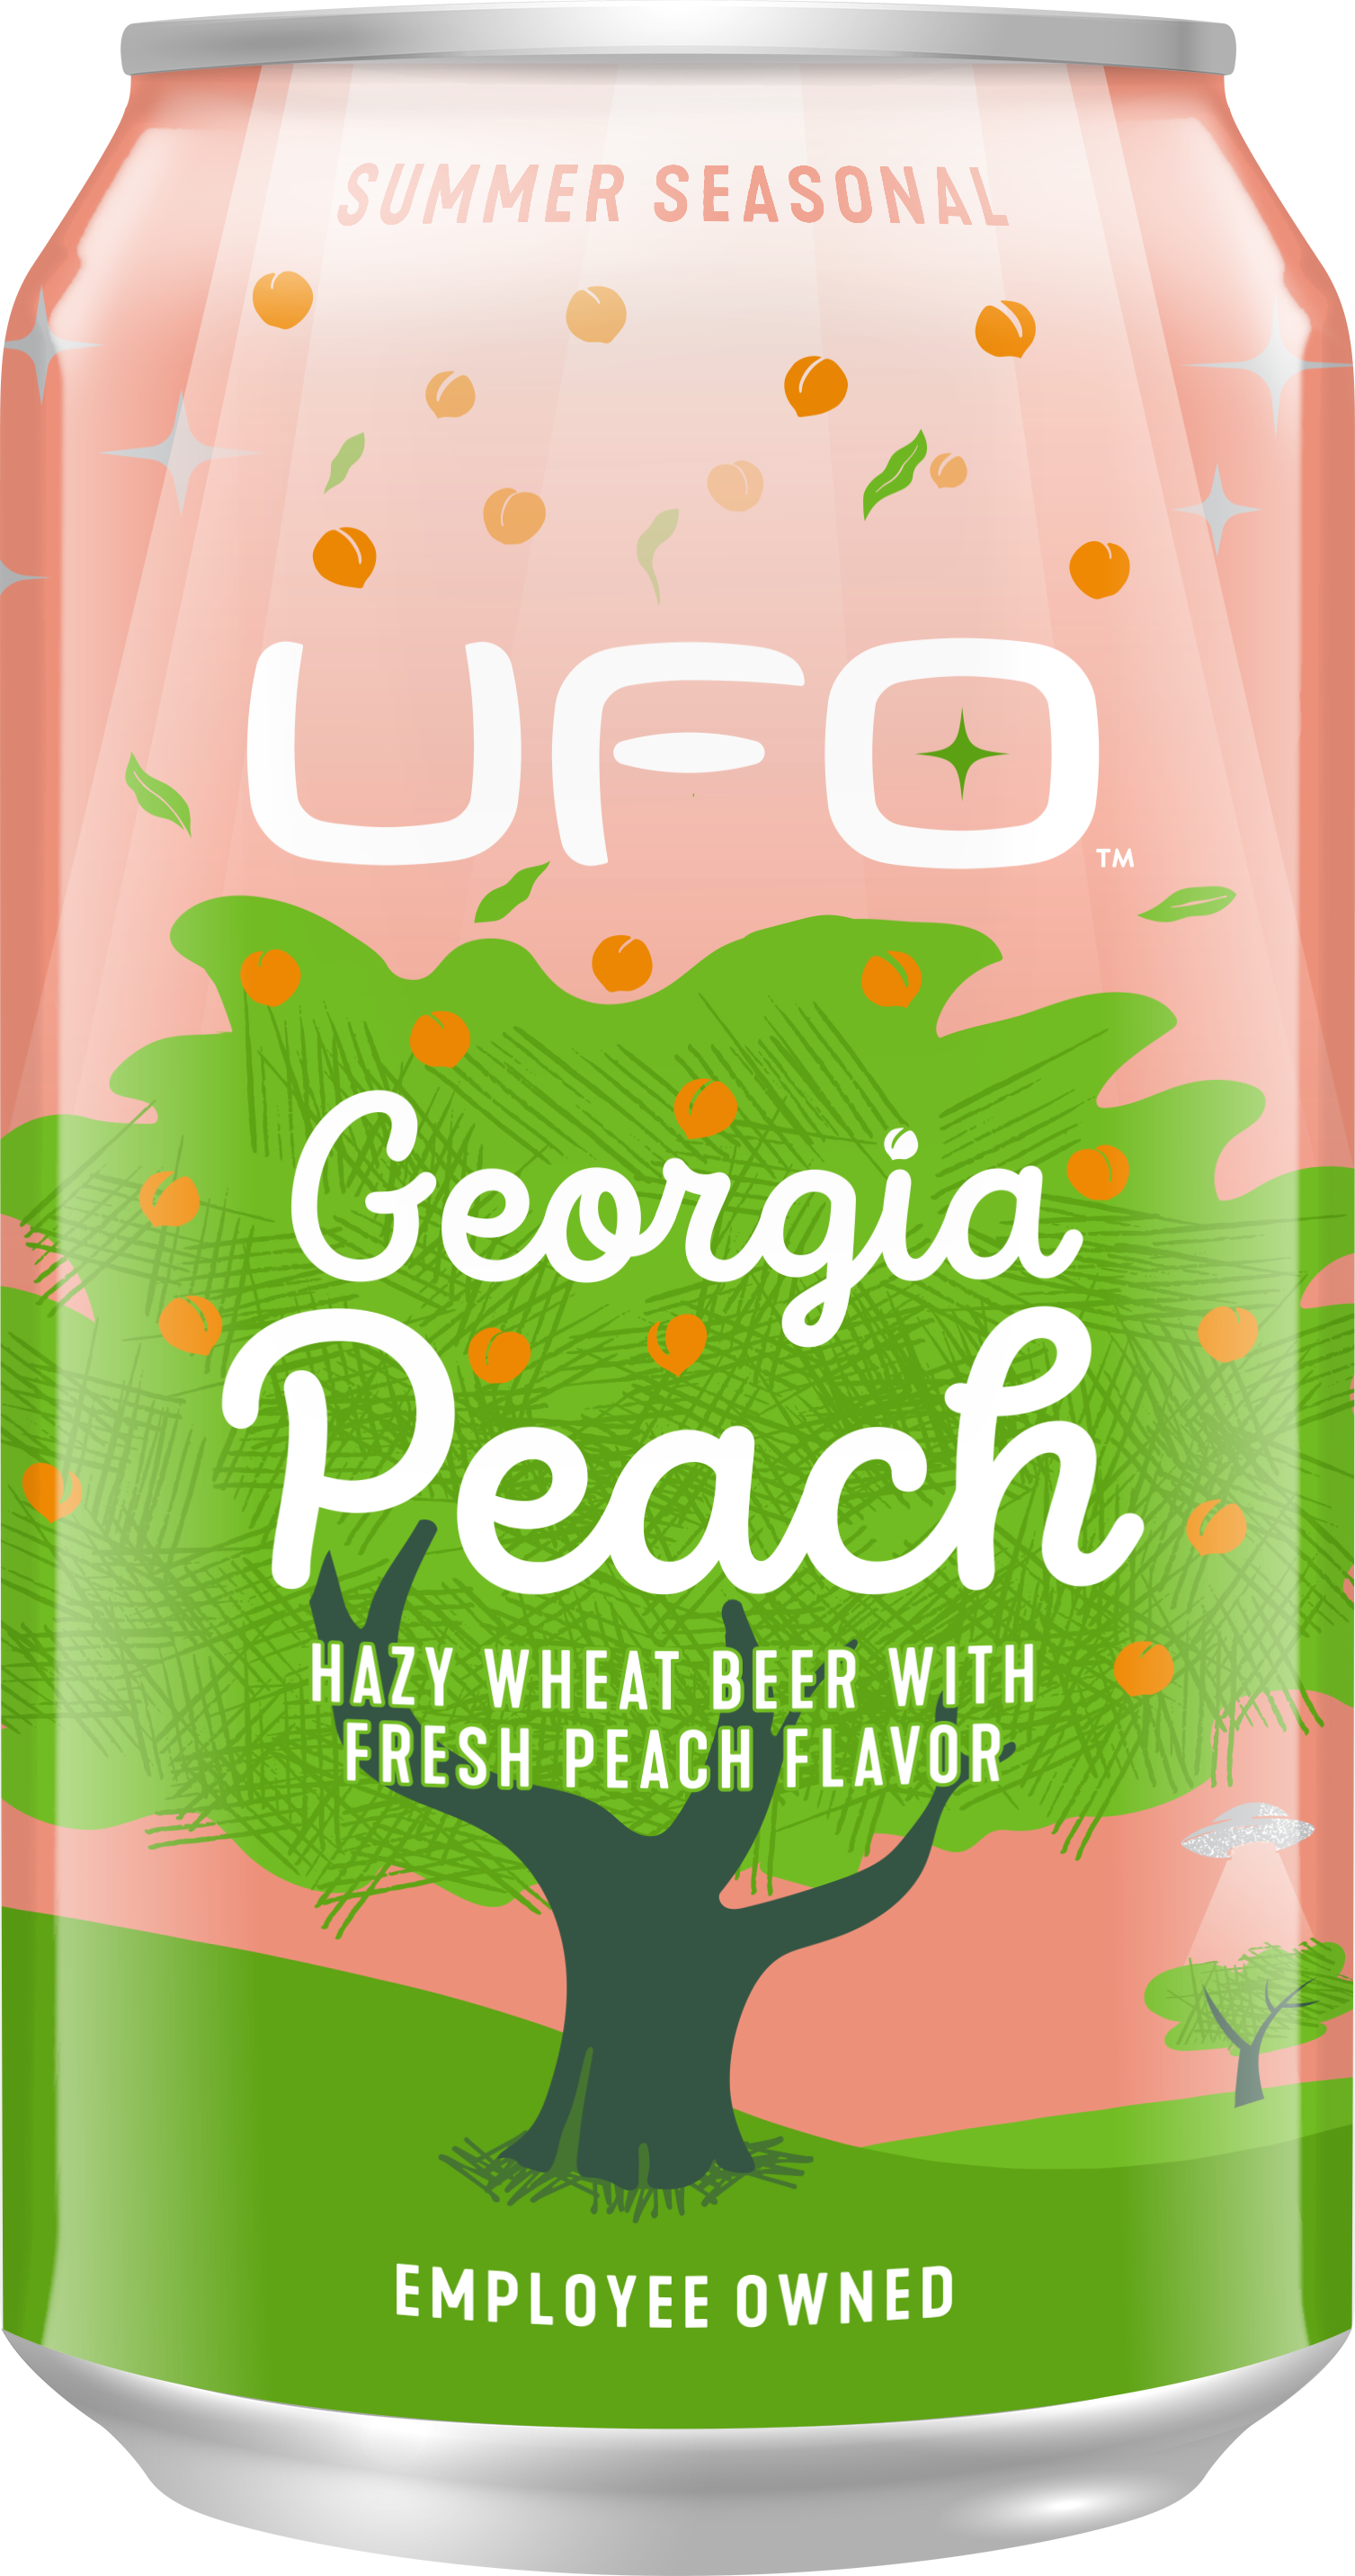 UFO Georgia Peach